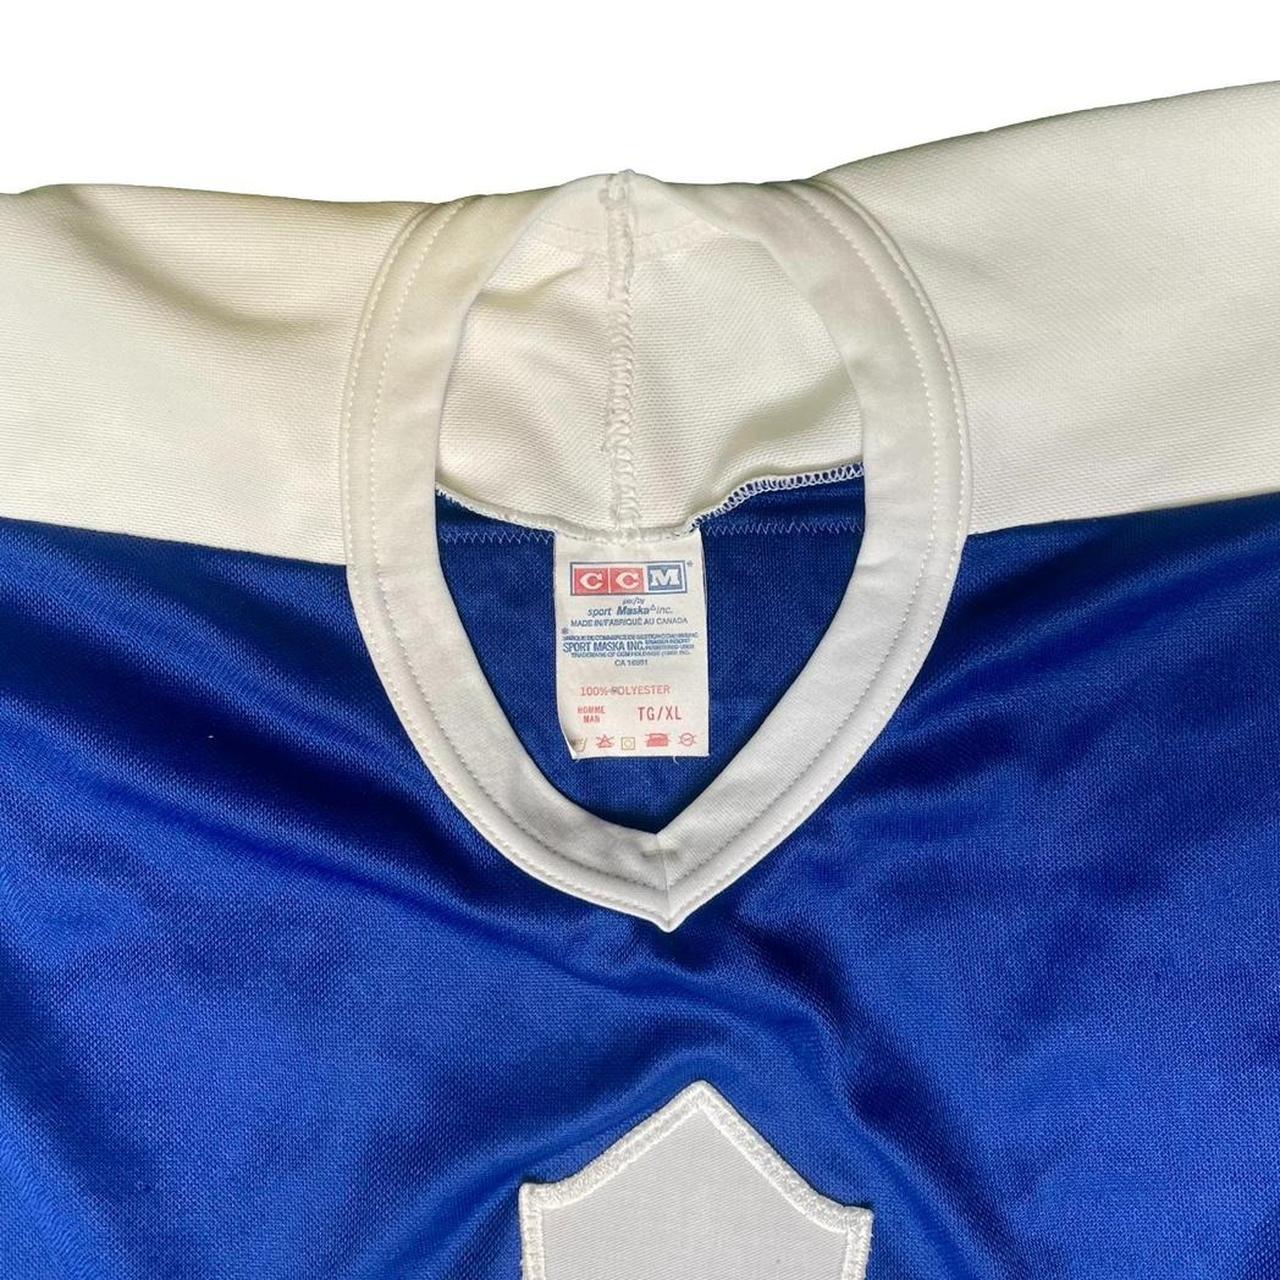 1989 Al Iafrate Toronto Maple Leafs CCM NHL Jersey Size Small – Rare VNTG